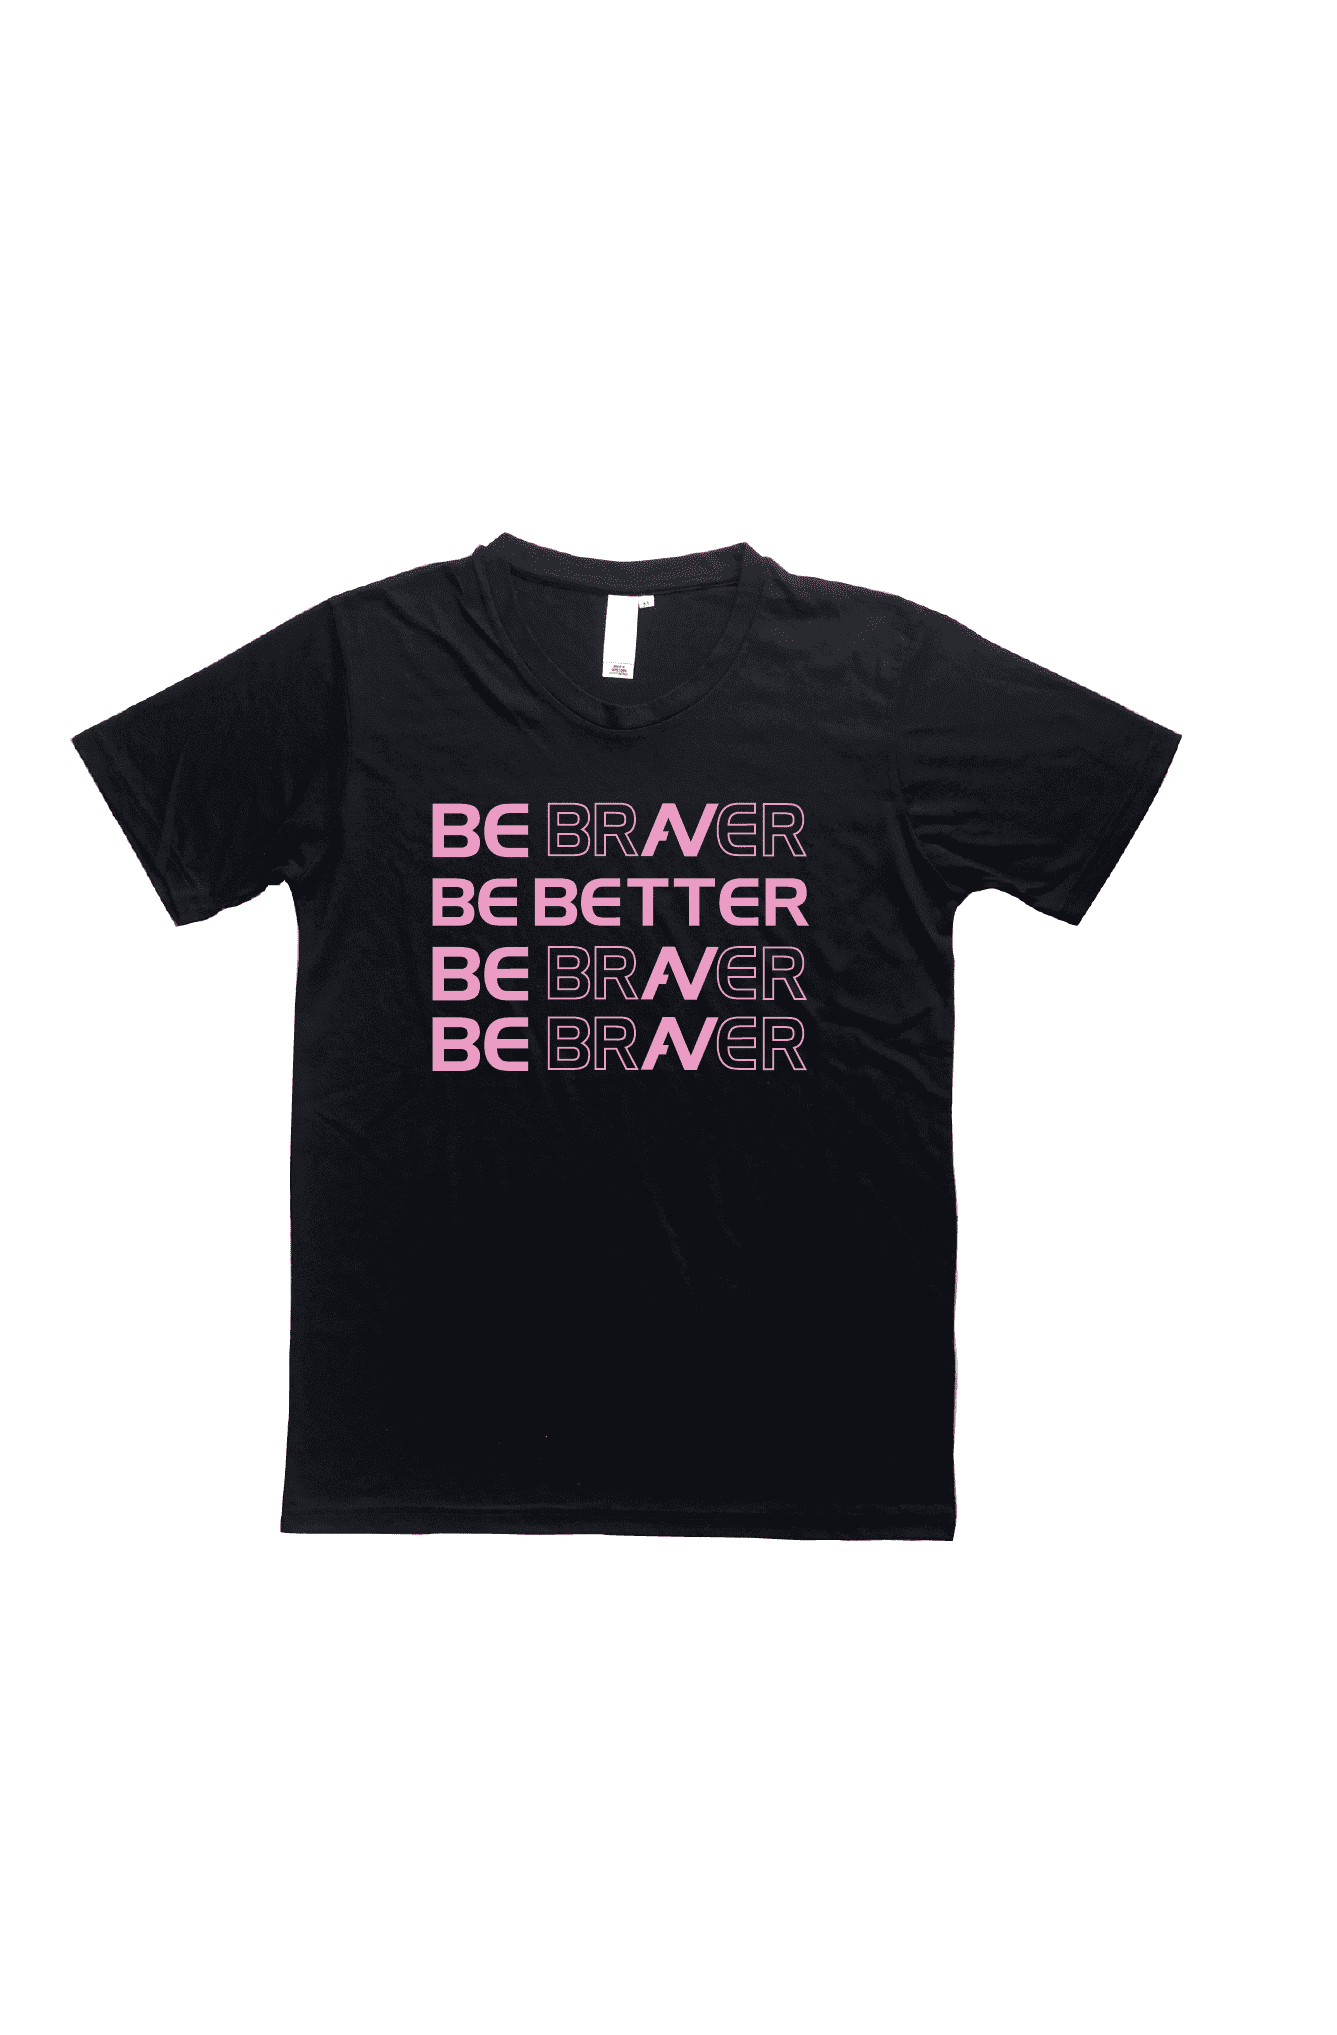 Be Better print on black t-shirt